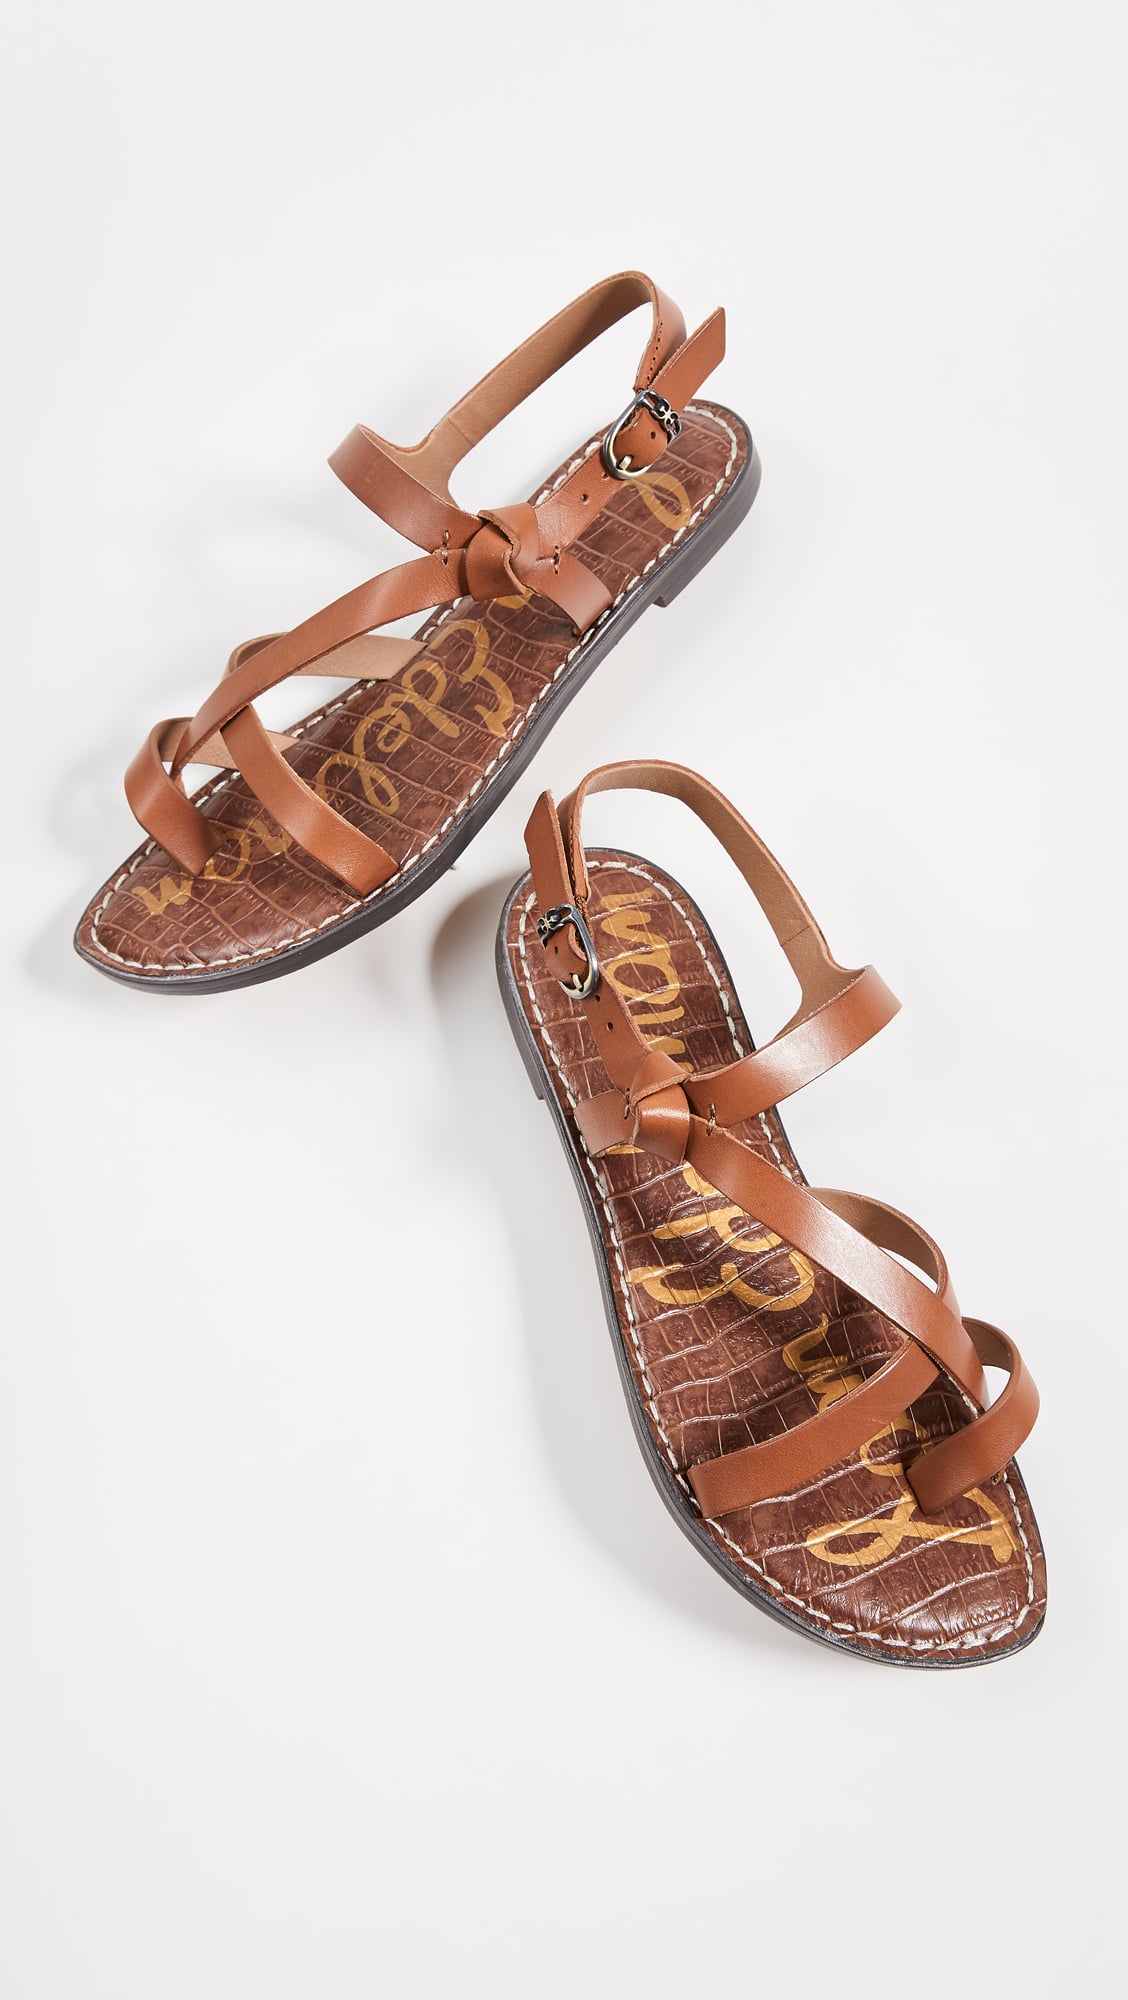 Sam Edelman Gladis Sandals | These 